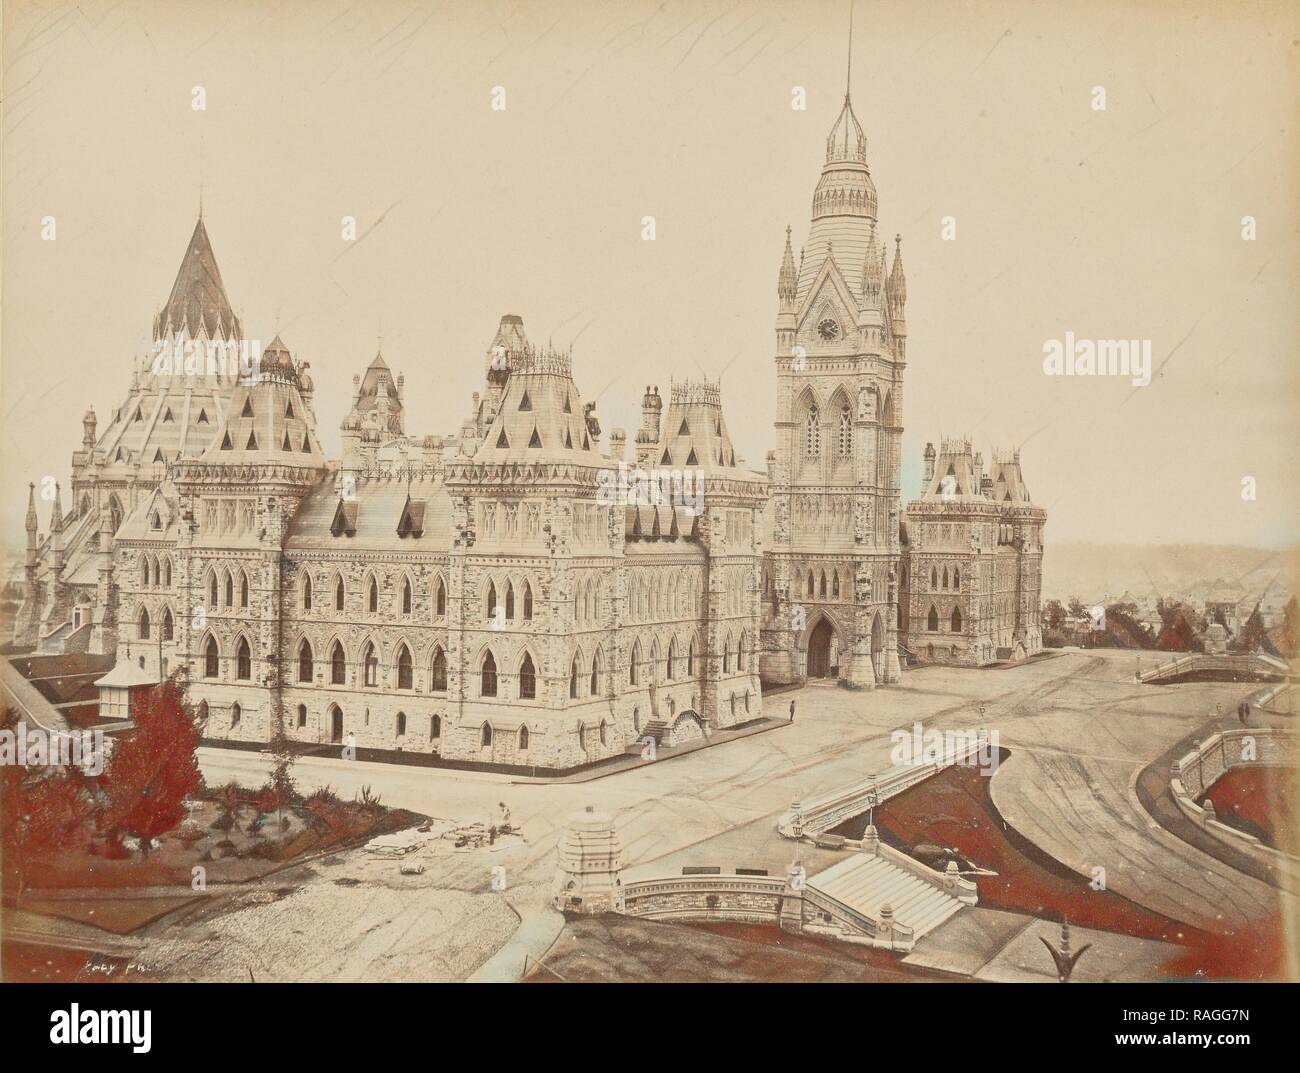 Ottawa, Palais du parlement, batiment principal, Ottawa, Canada, 1860s - 1880s, Albumen silver print. Reimagined Stock Photo